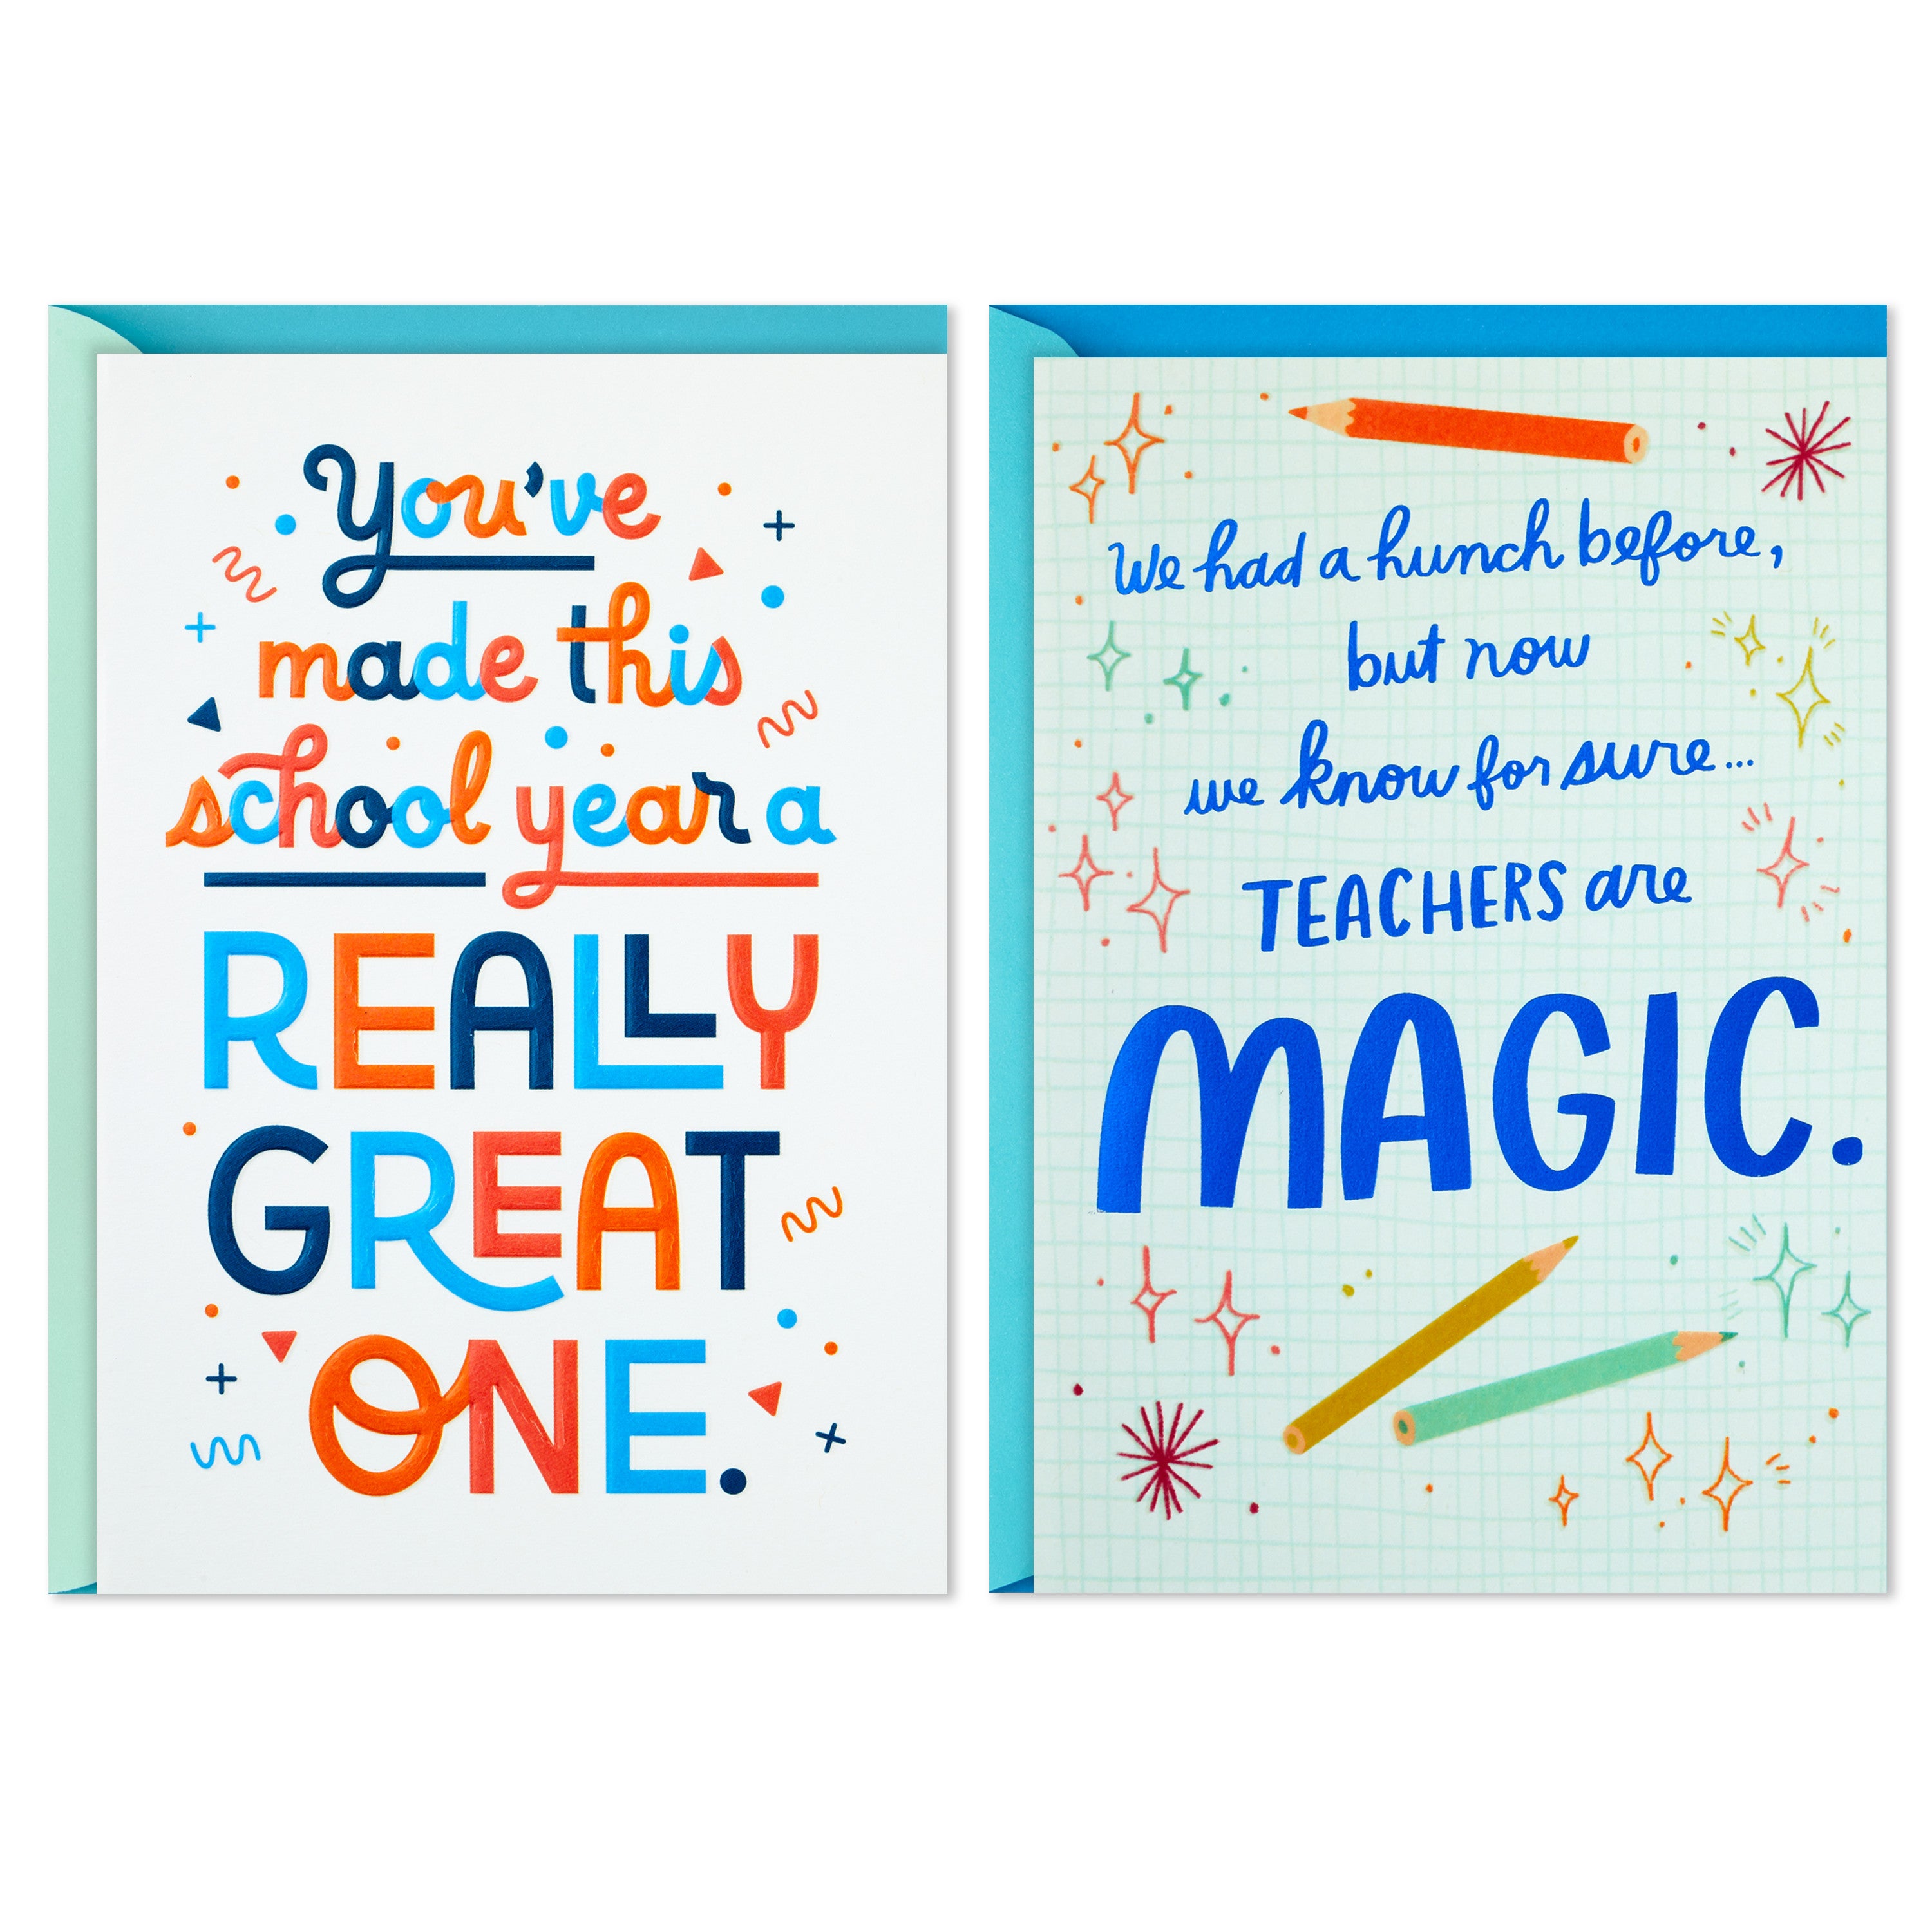 Pack of 2 Thank You Cards, Teachers are Magic (Teacher Appreciation, Coach Appreciation)